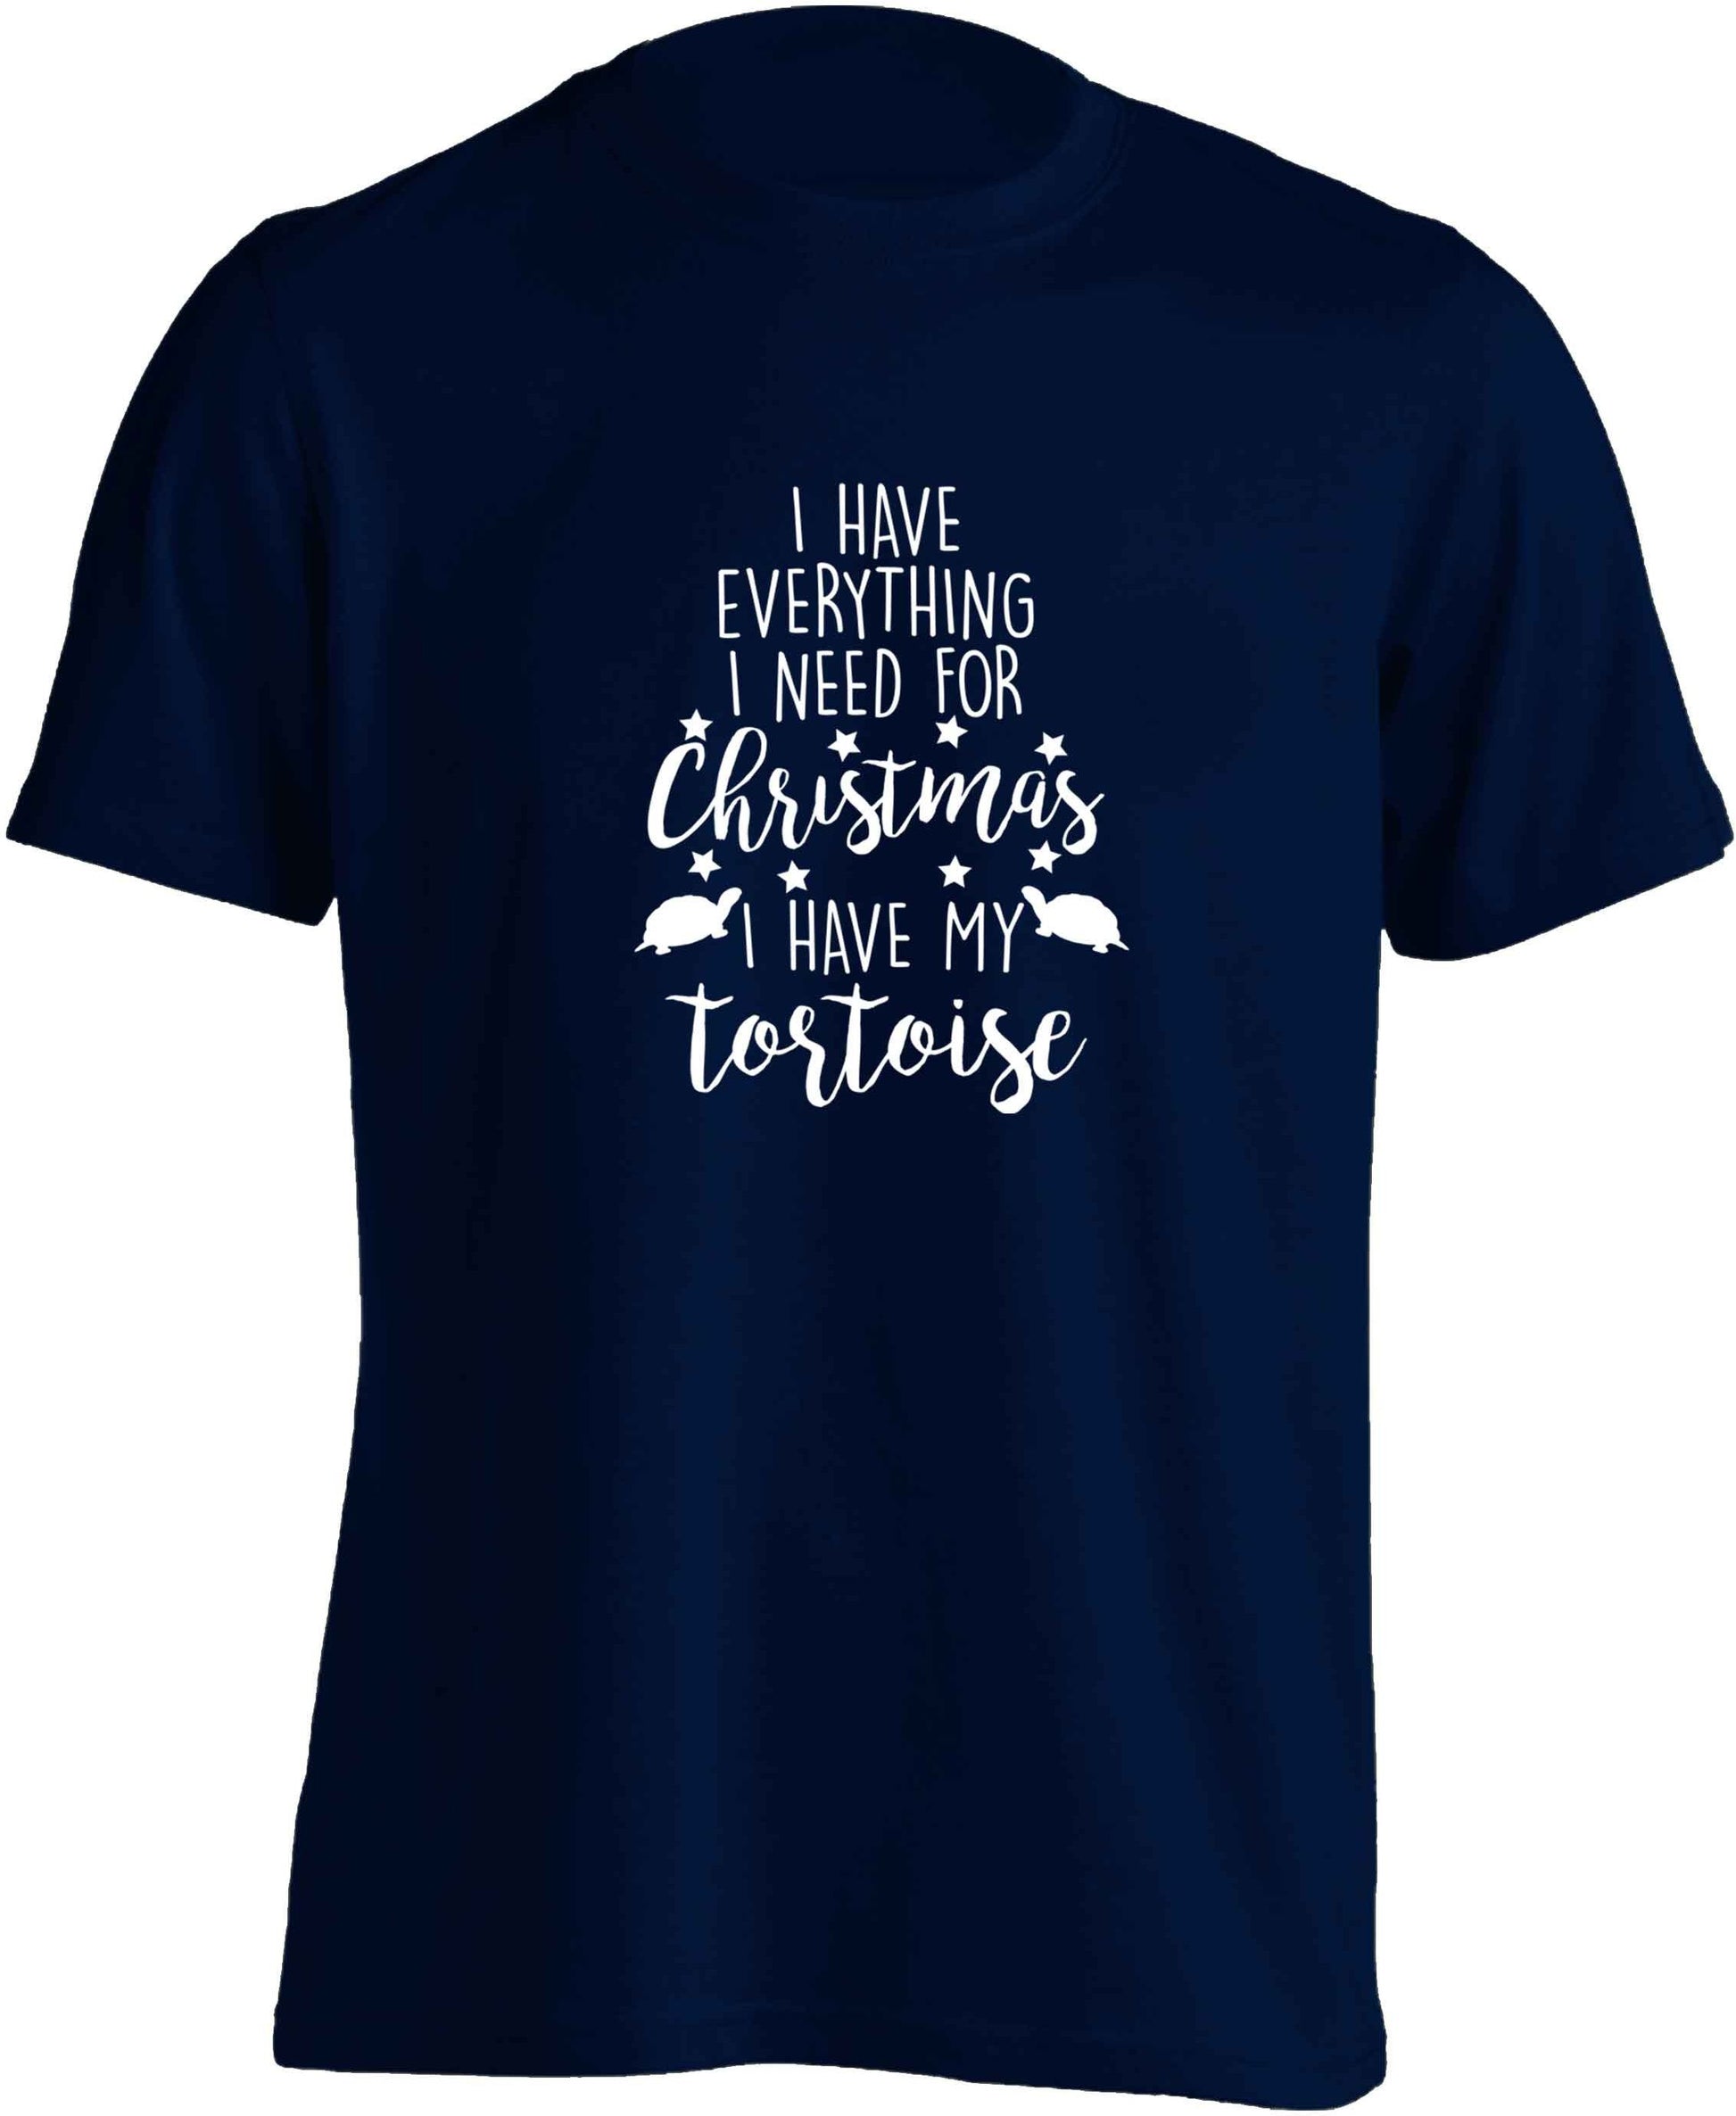 I have everything I need for Christmas I have my tortoise adults unisex navy Tshirt 2XL